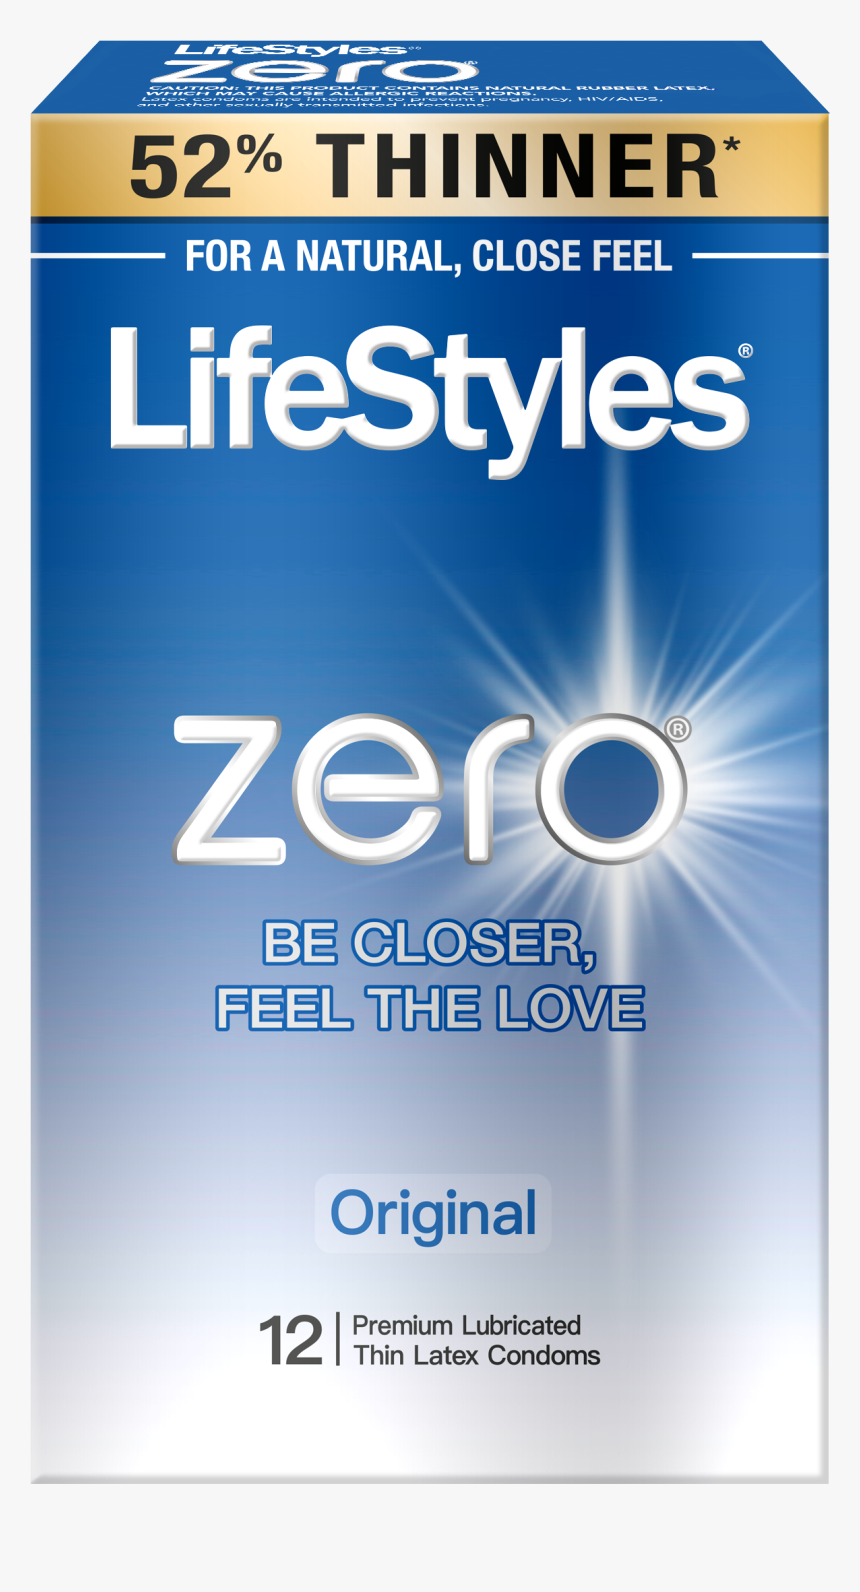 Lifestyles Zero Condoms, HD Png Download, Free Download